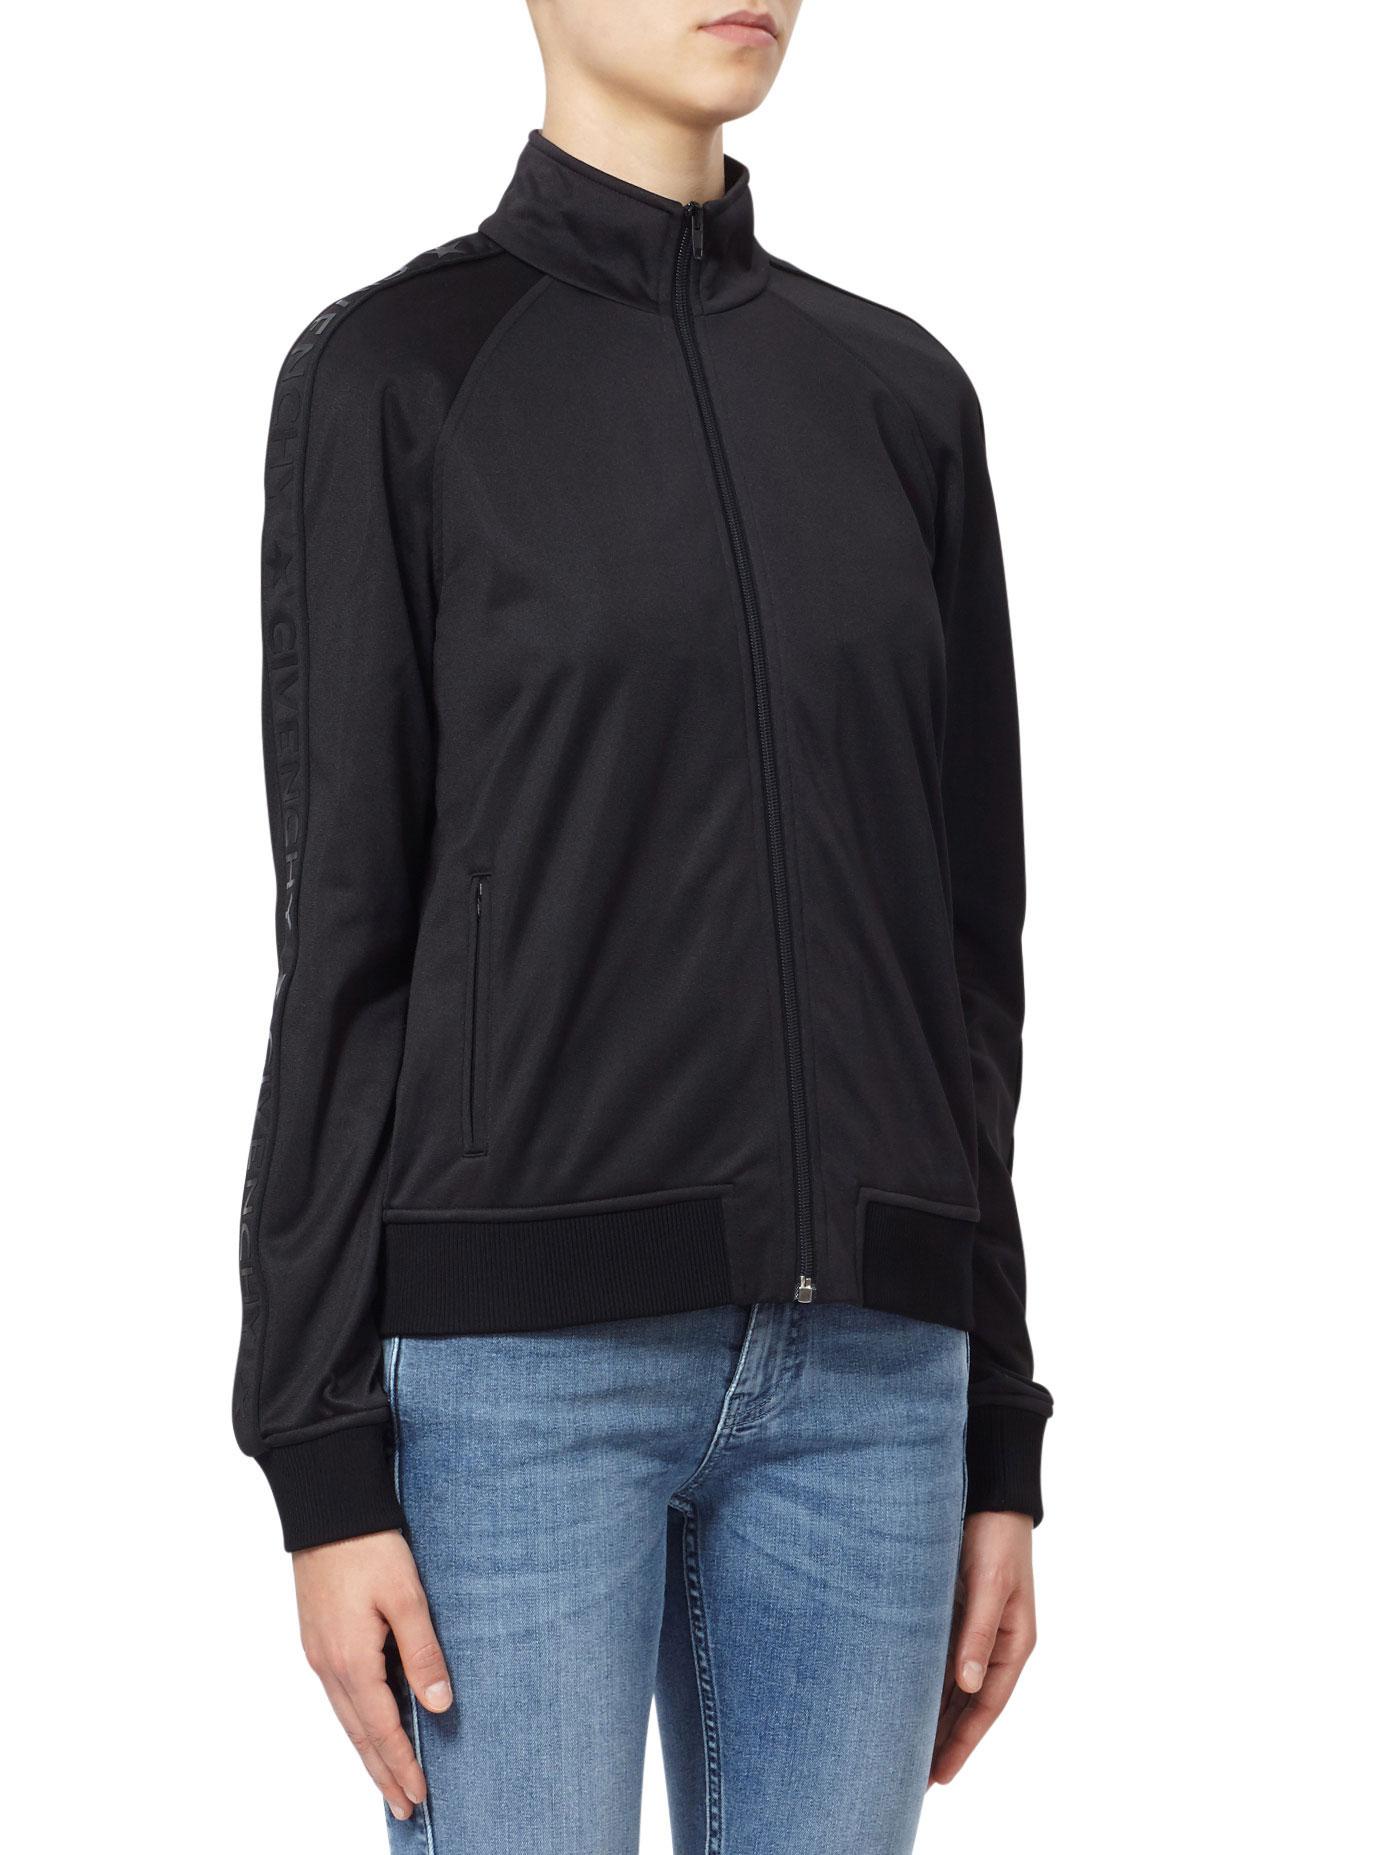 Lyst - Givenchy Logo Sleeve Tracksuit Jacket in Black